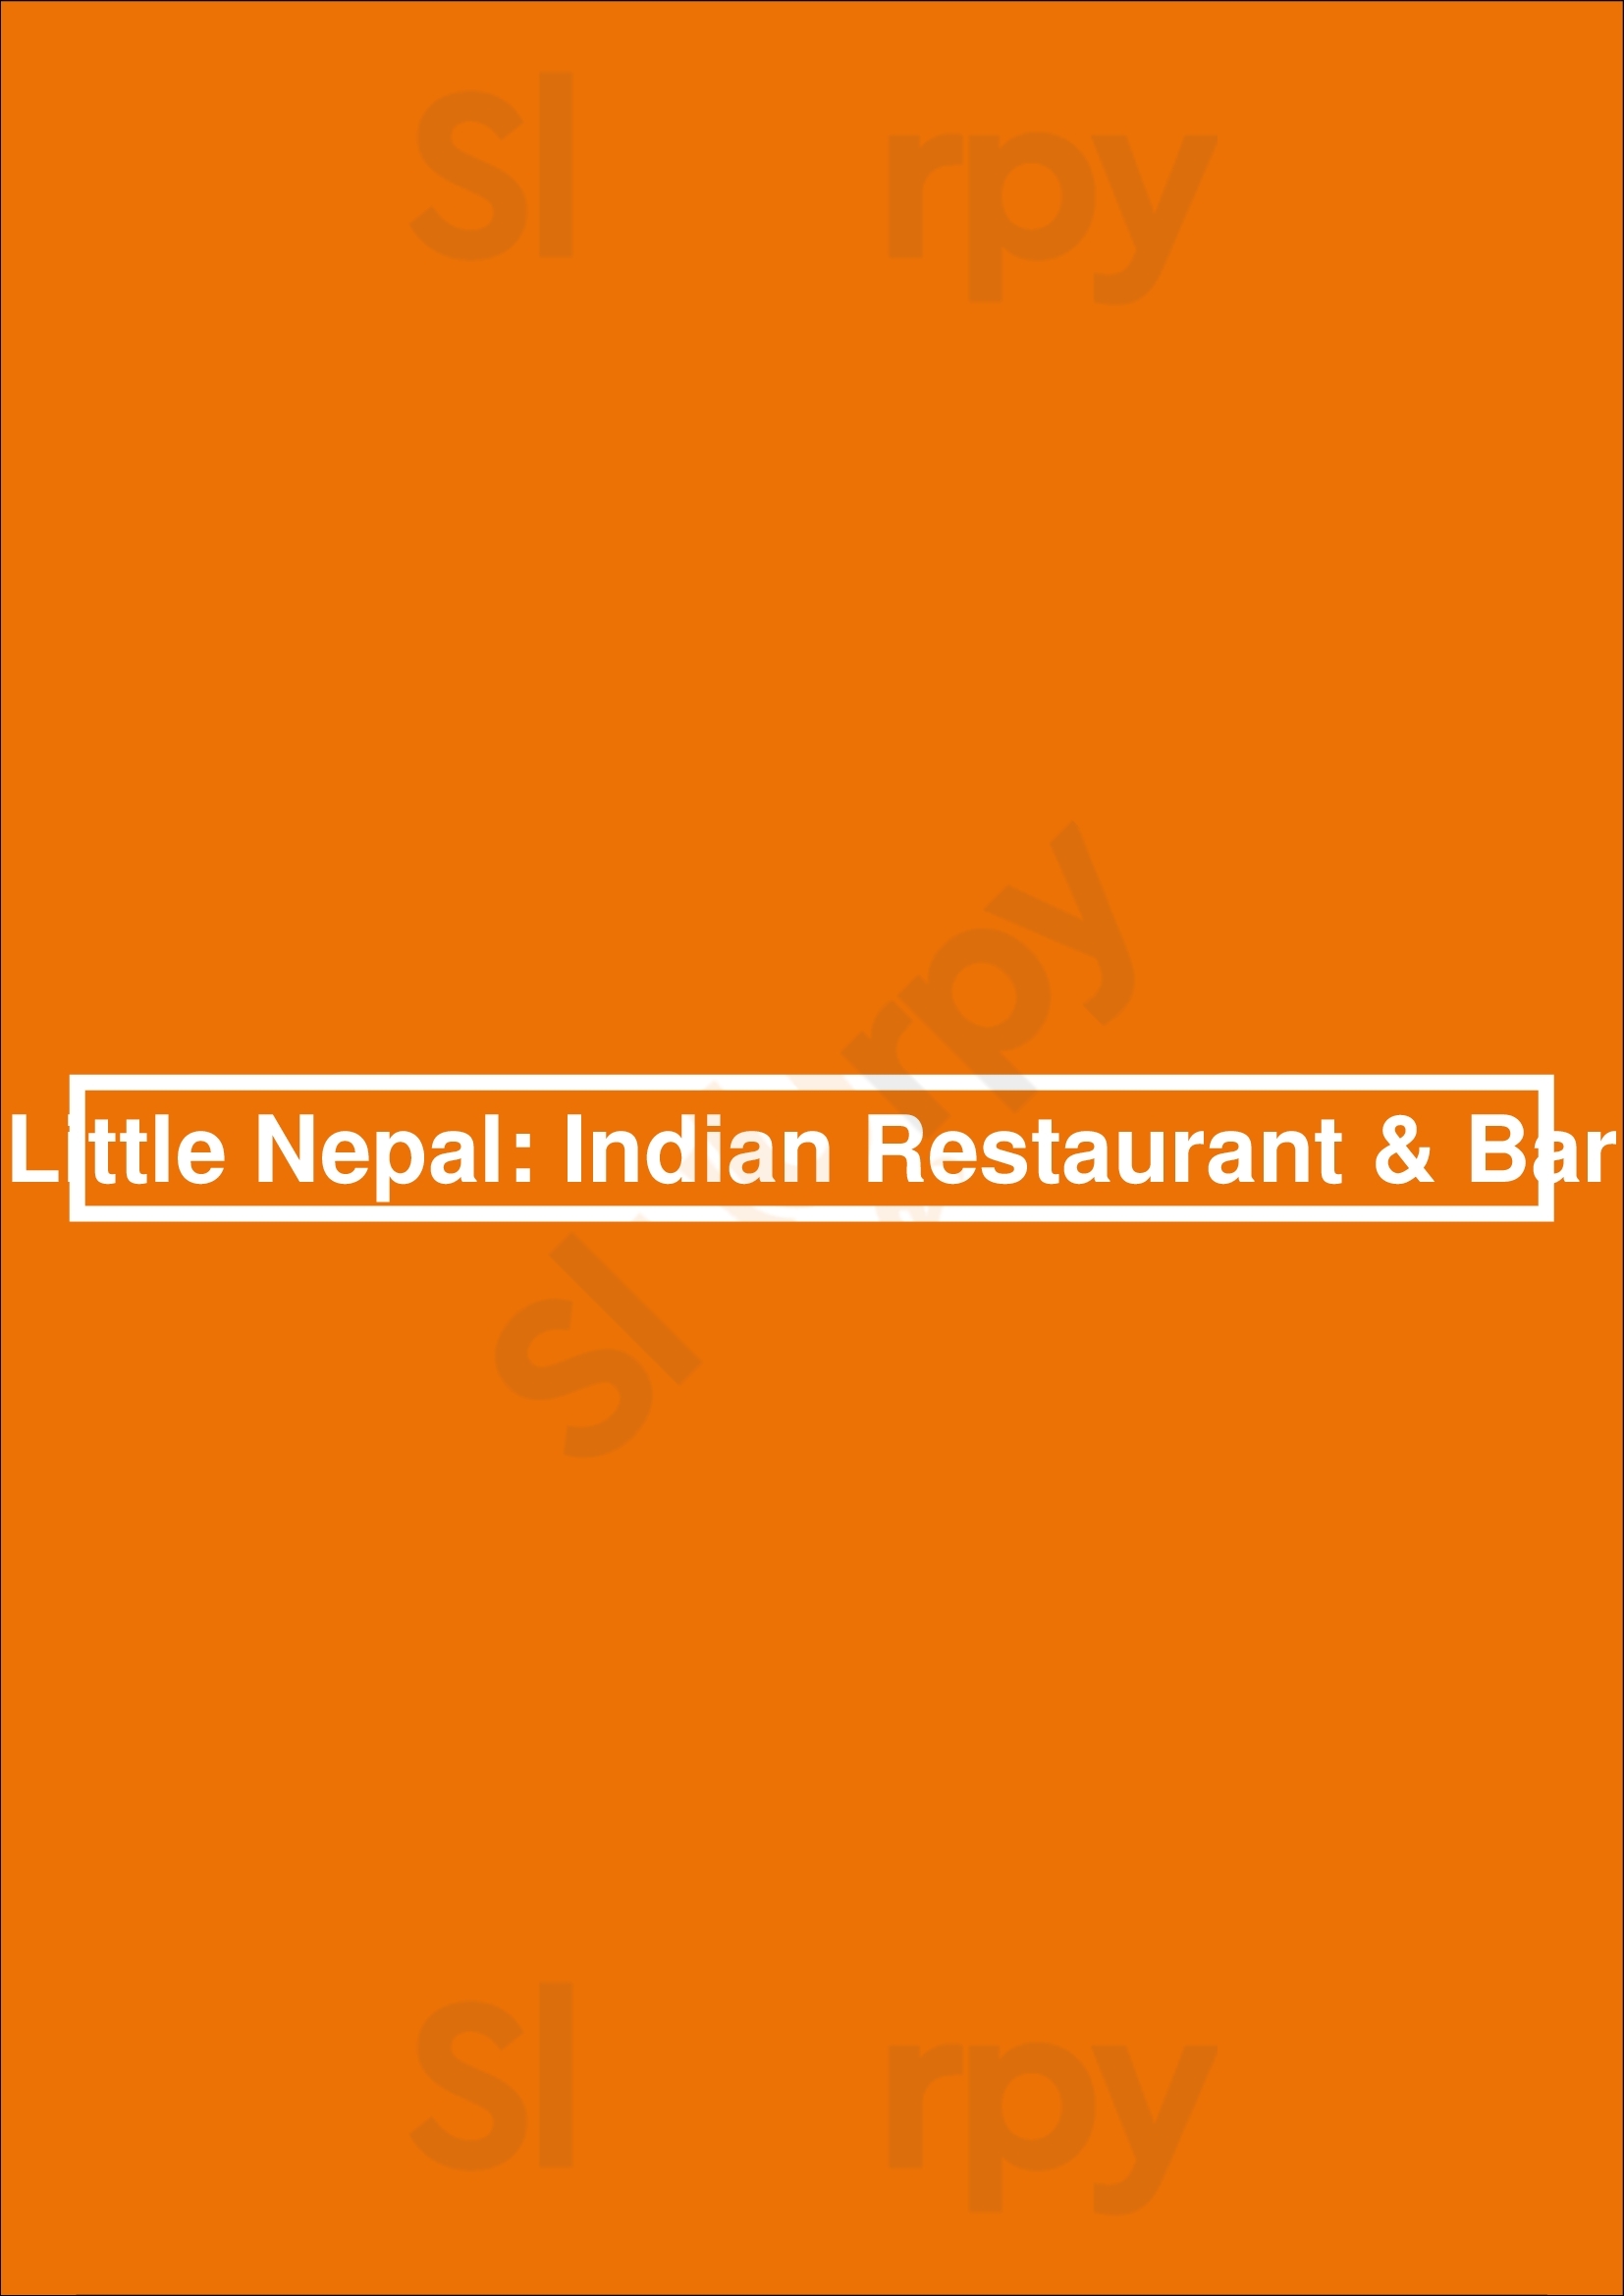 Little Nepal: Indian Restaurant & Bar Colorado Springs Menu - 1